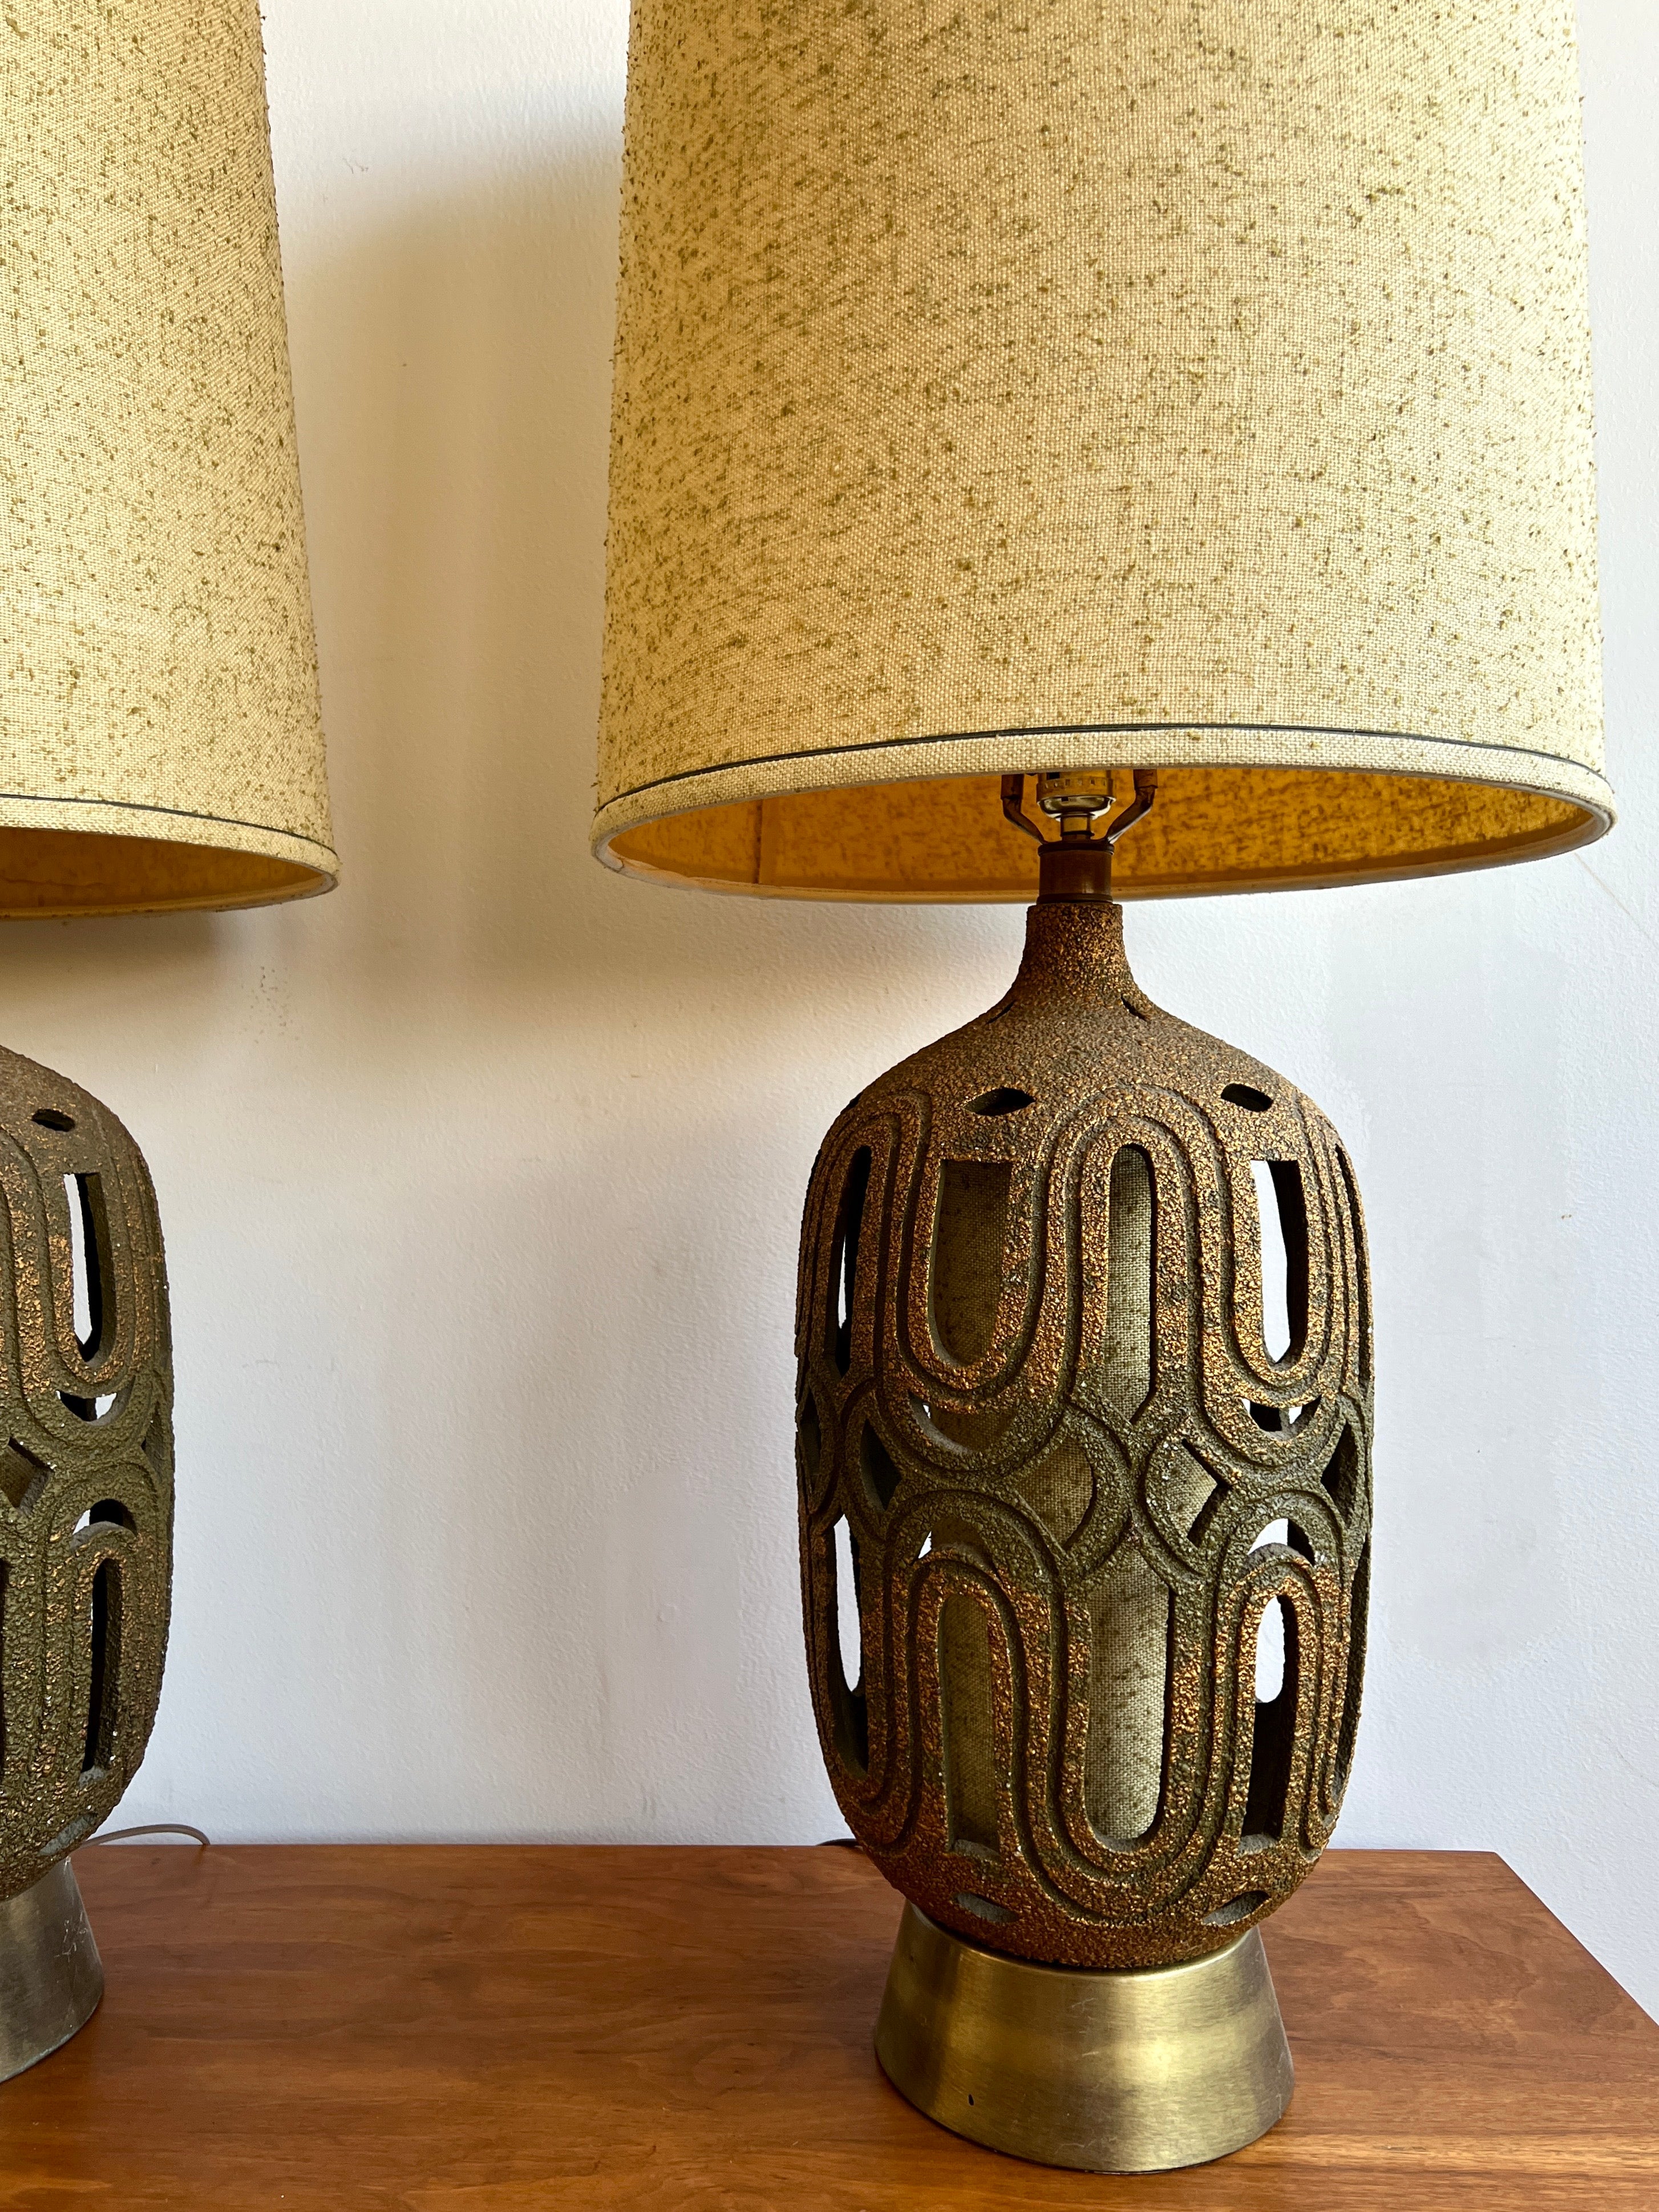 Pair of a Vintage Mid Century Ceramic Lamps